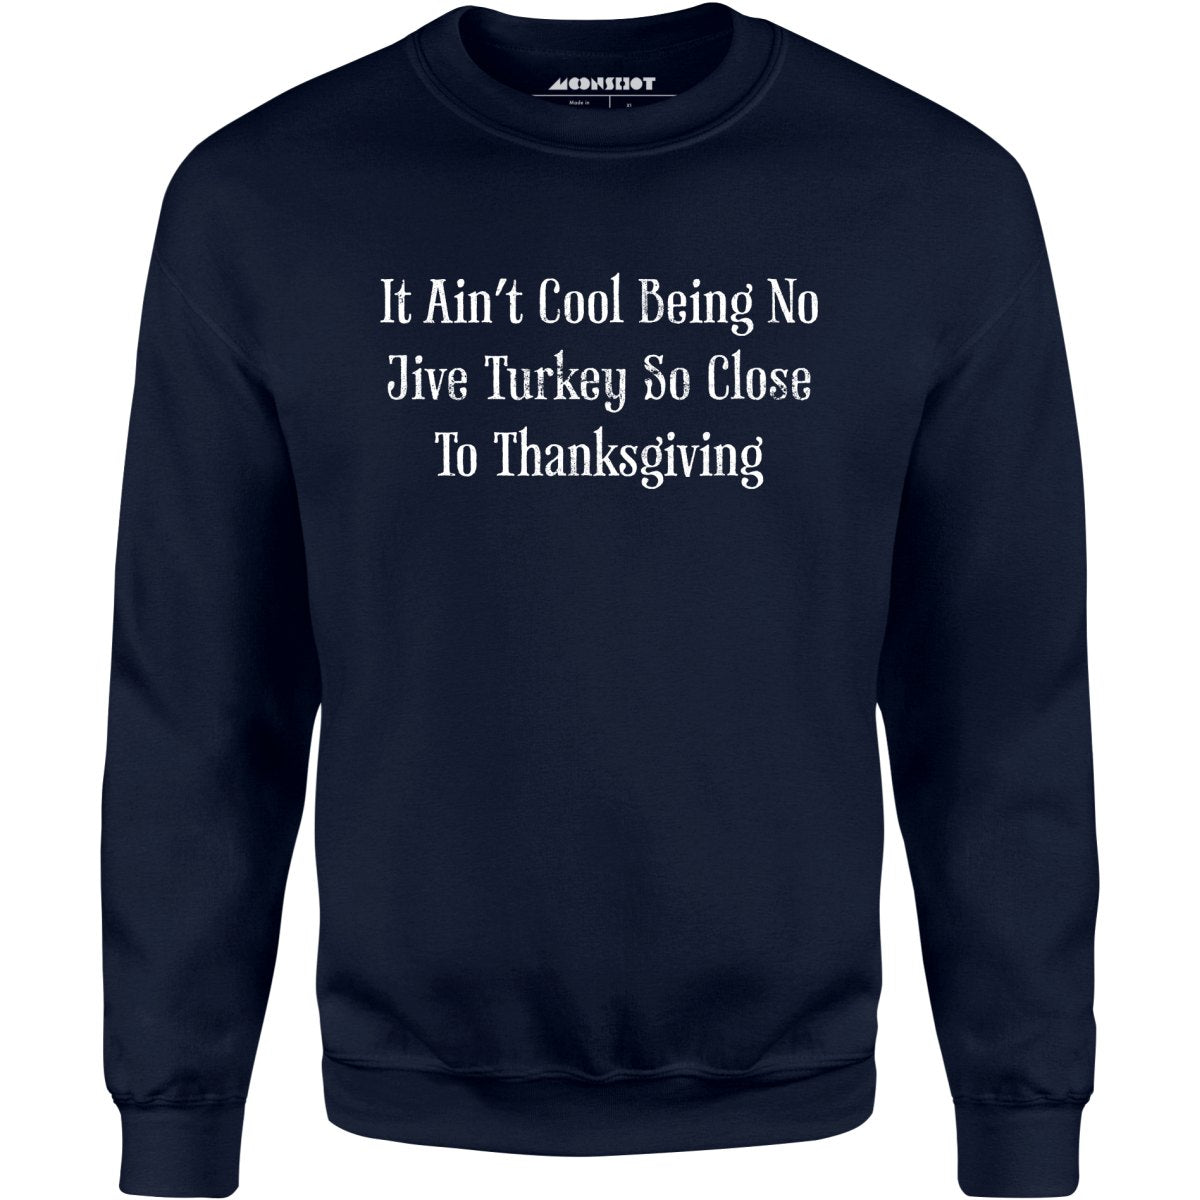 It Ain't Cool Being No Jive Turkey So Close to Thanksgiving - Unisex Sweatshirt